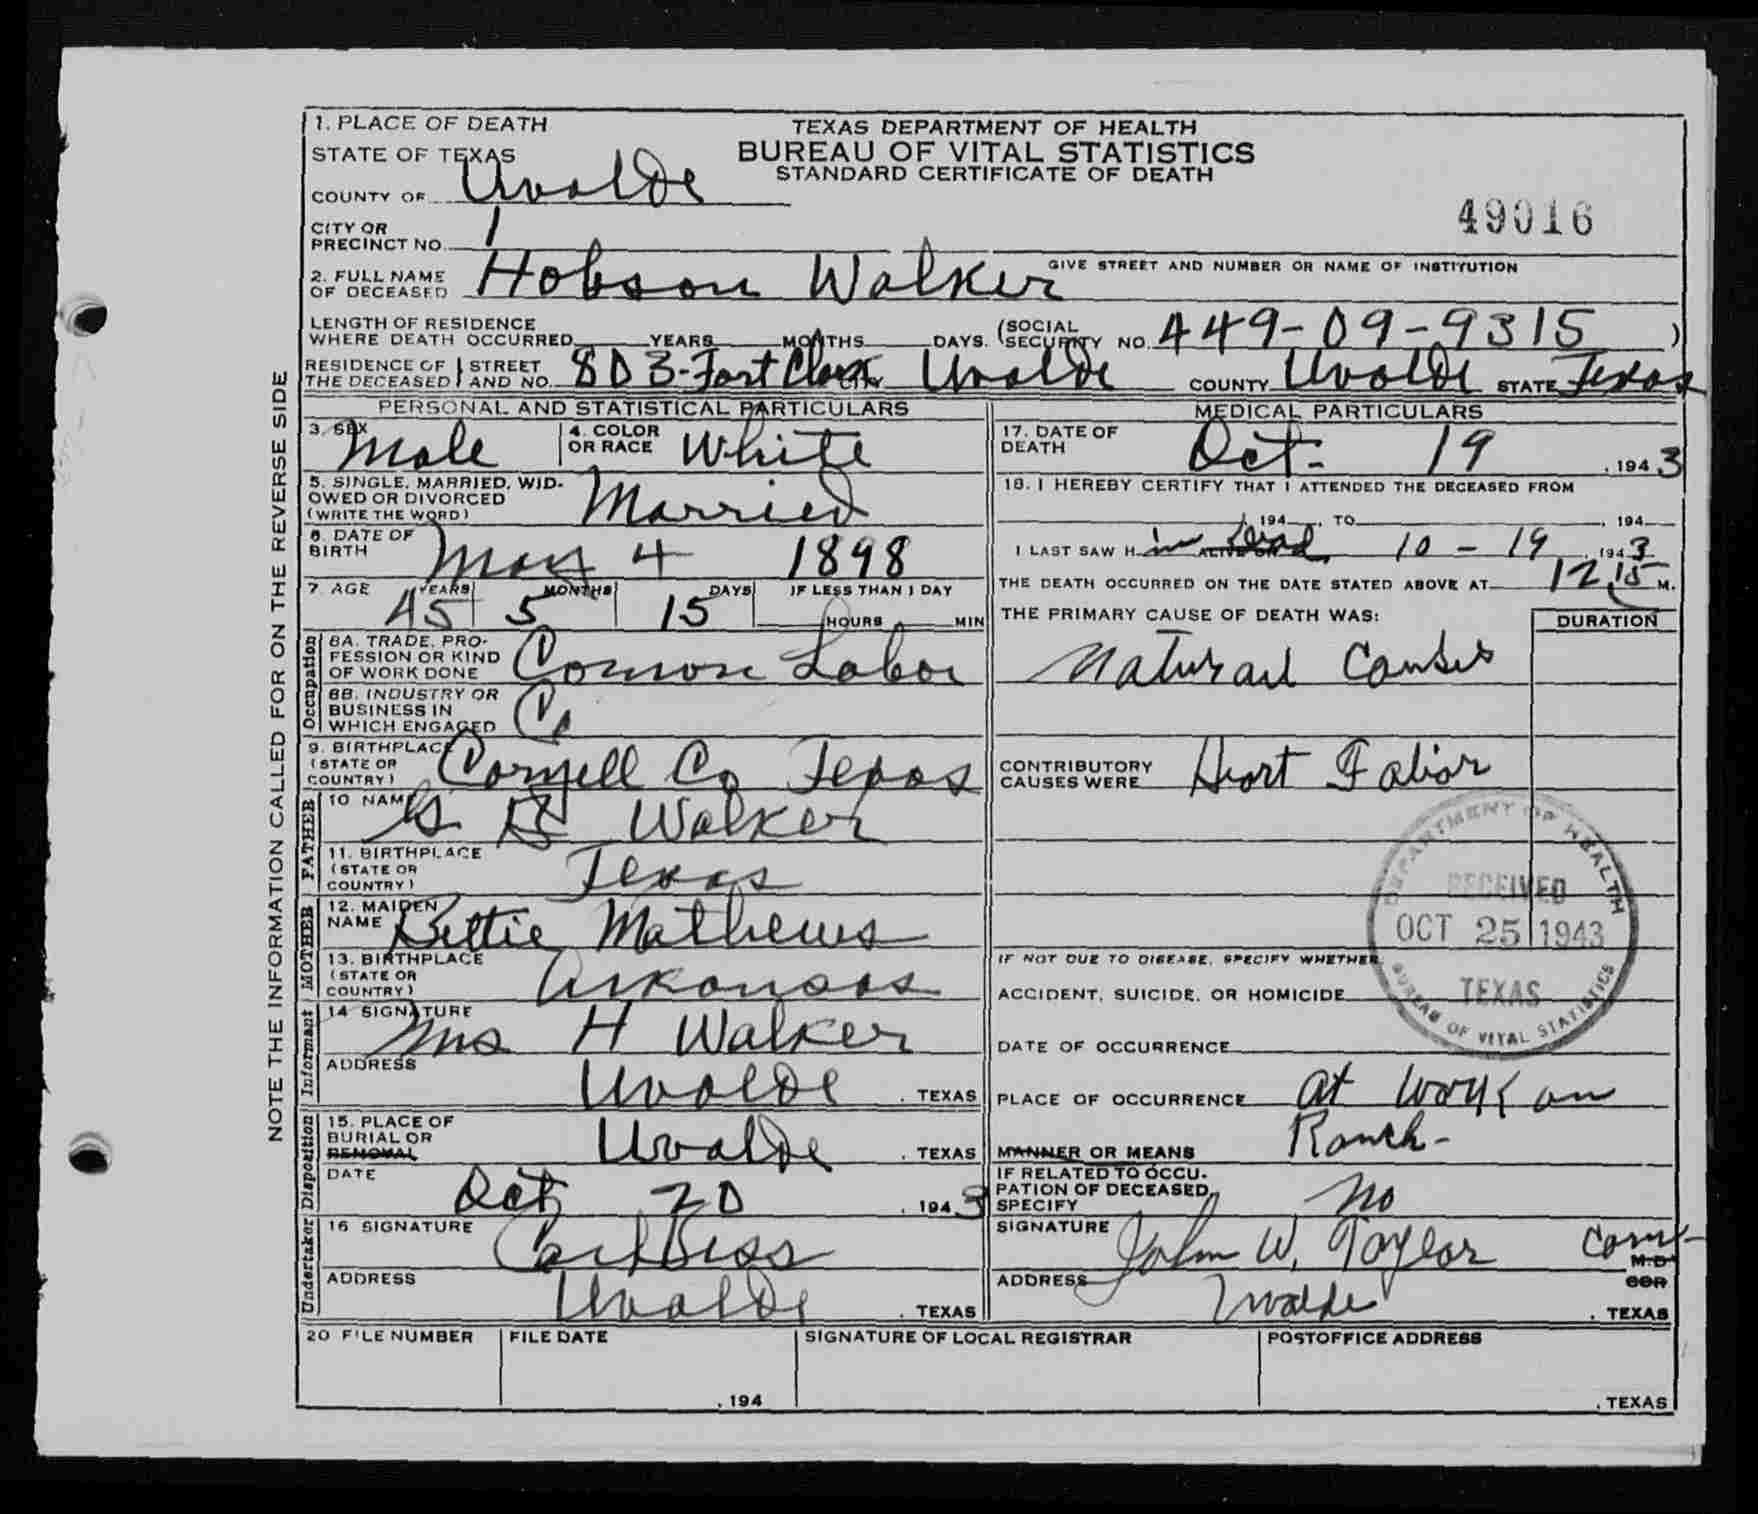 Dewey Hobson 'Hobson' Walker, death certificate, 1943, Uvalde County, Texas